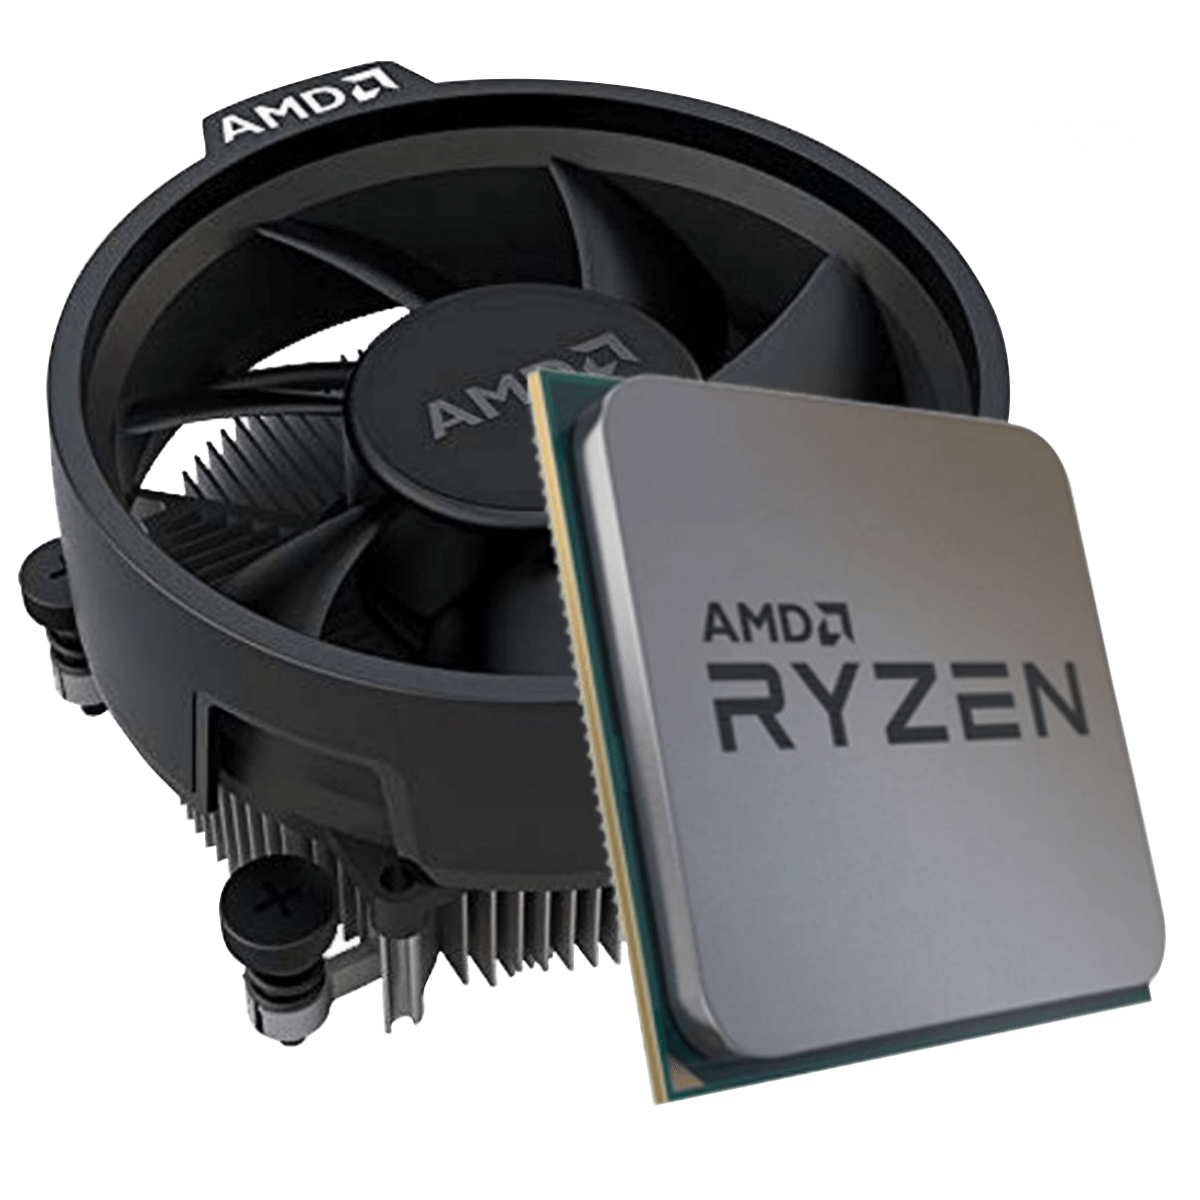 Kit Upgrade, AMD Ryzen 5 3600, Gigabyte B550M AORUS ELITE, Memória DDR4 16GB (2x8GB), SSD 120GB